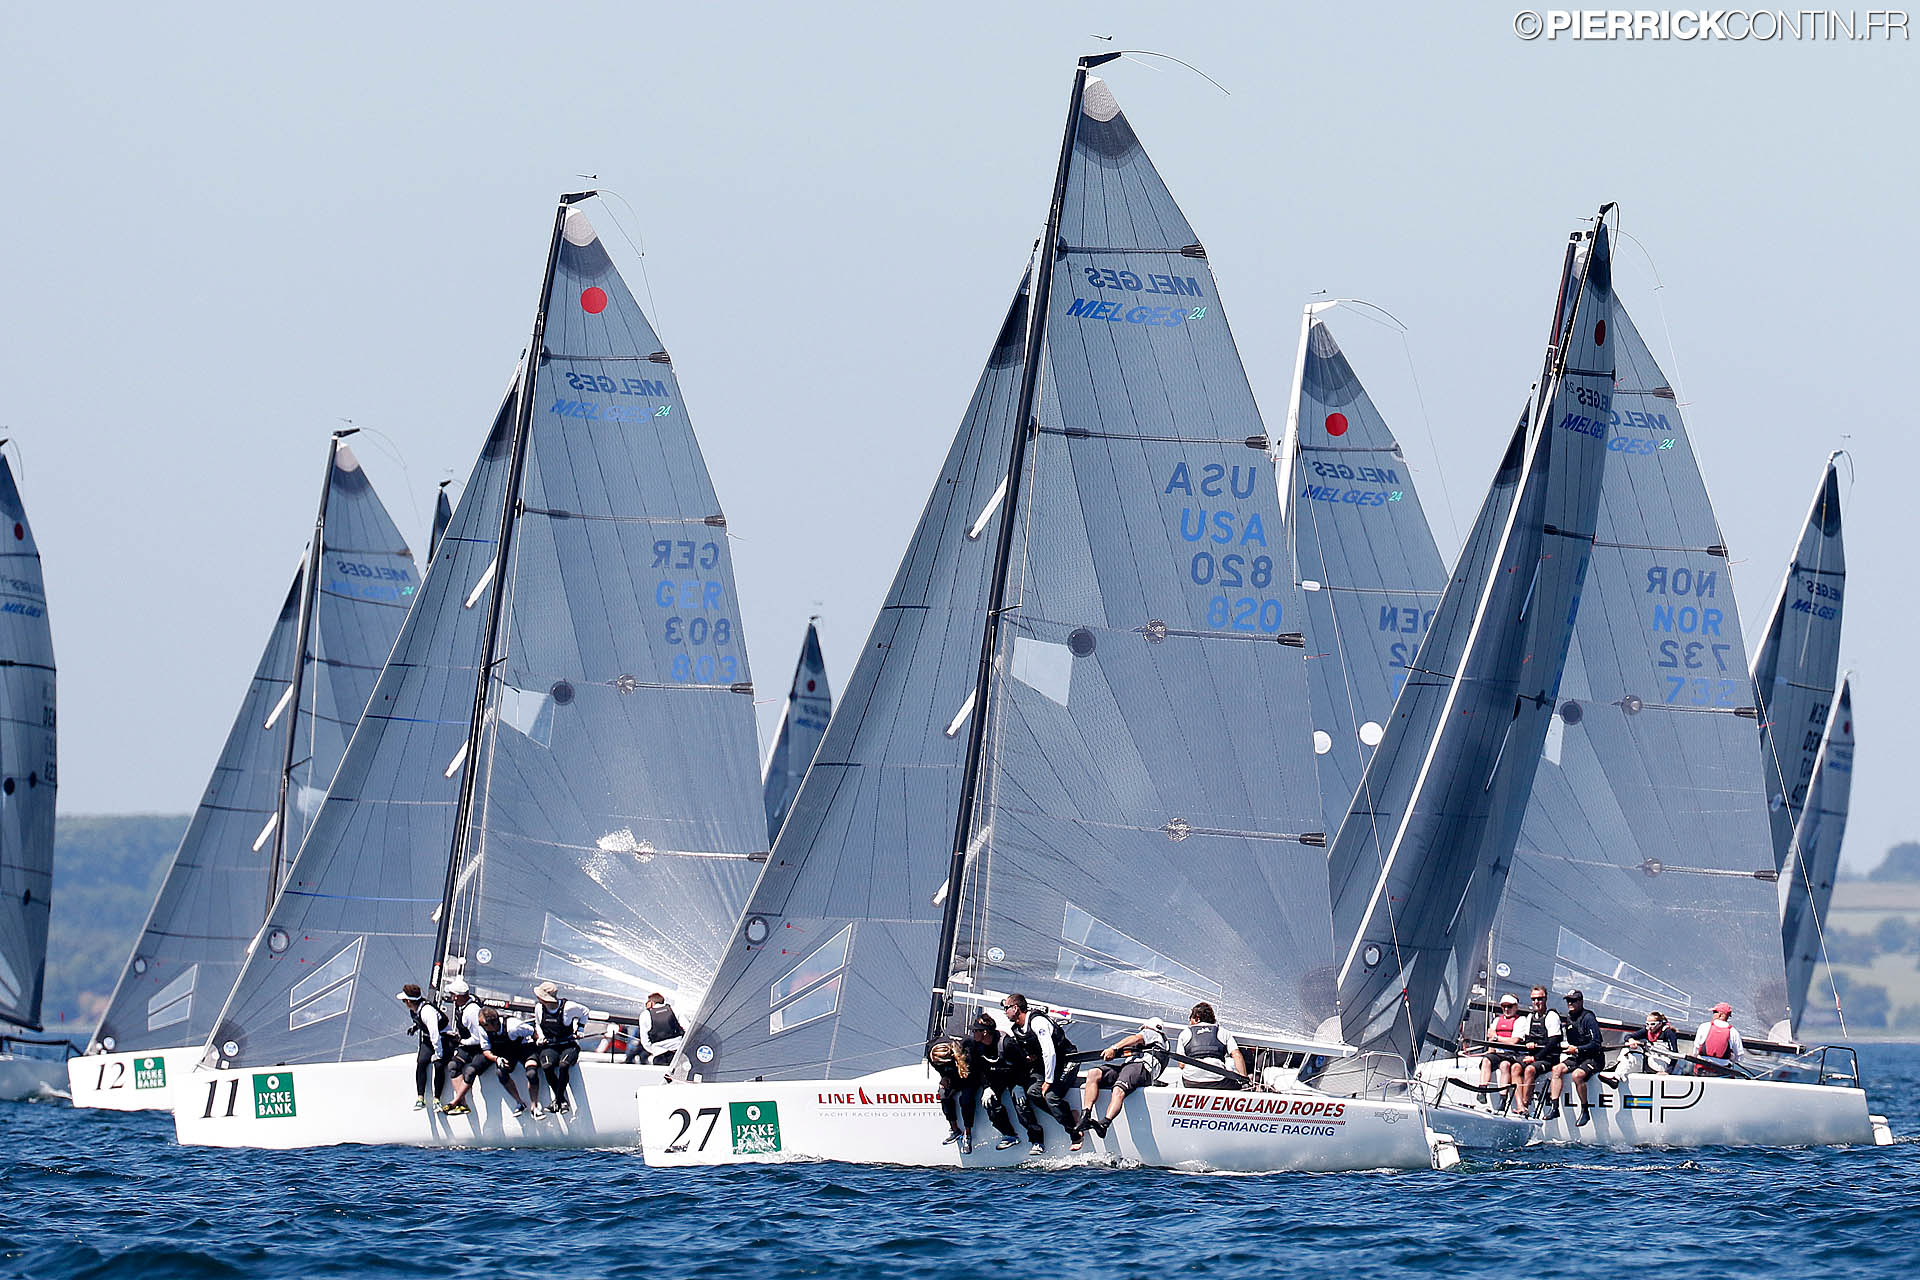 2015 Melges 24 World Championship in Middelfart, Denmark - photo Pierrick Contin